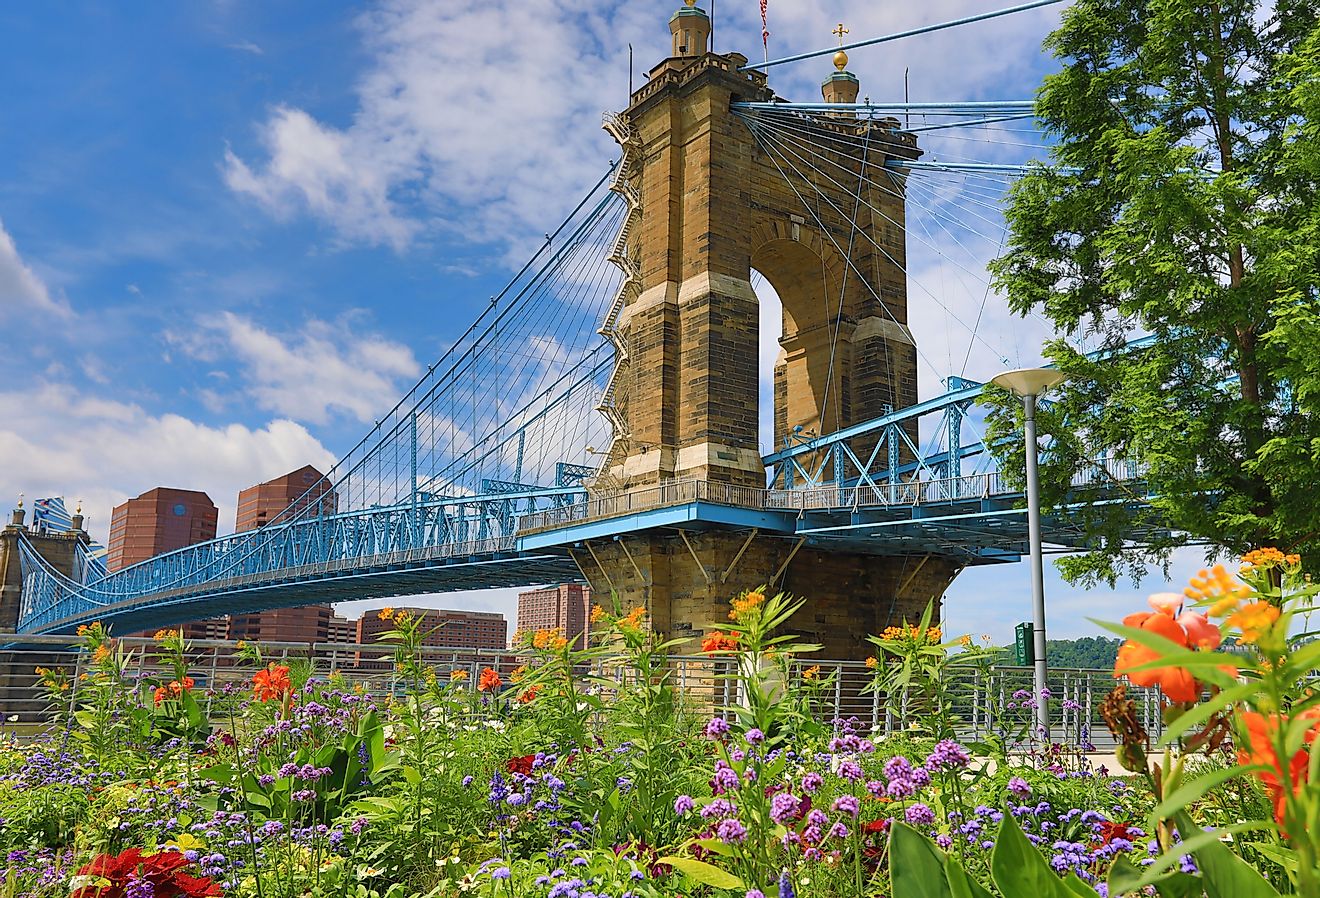 The John A. Roebling Bridge connects Covington, Kentucky to Cincinnati, Ohio.